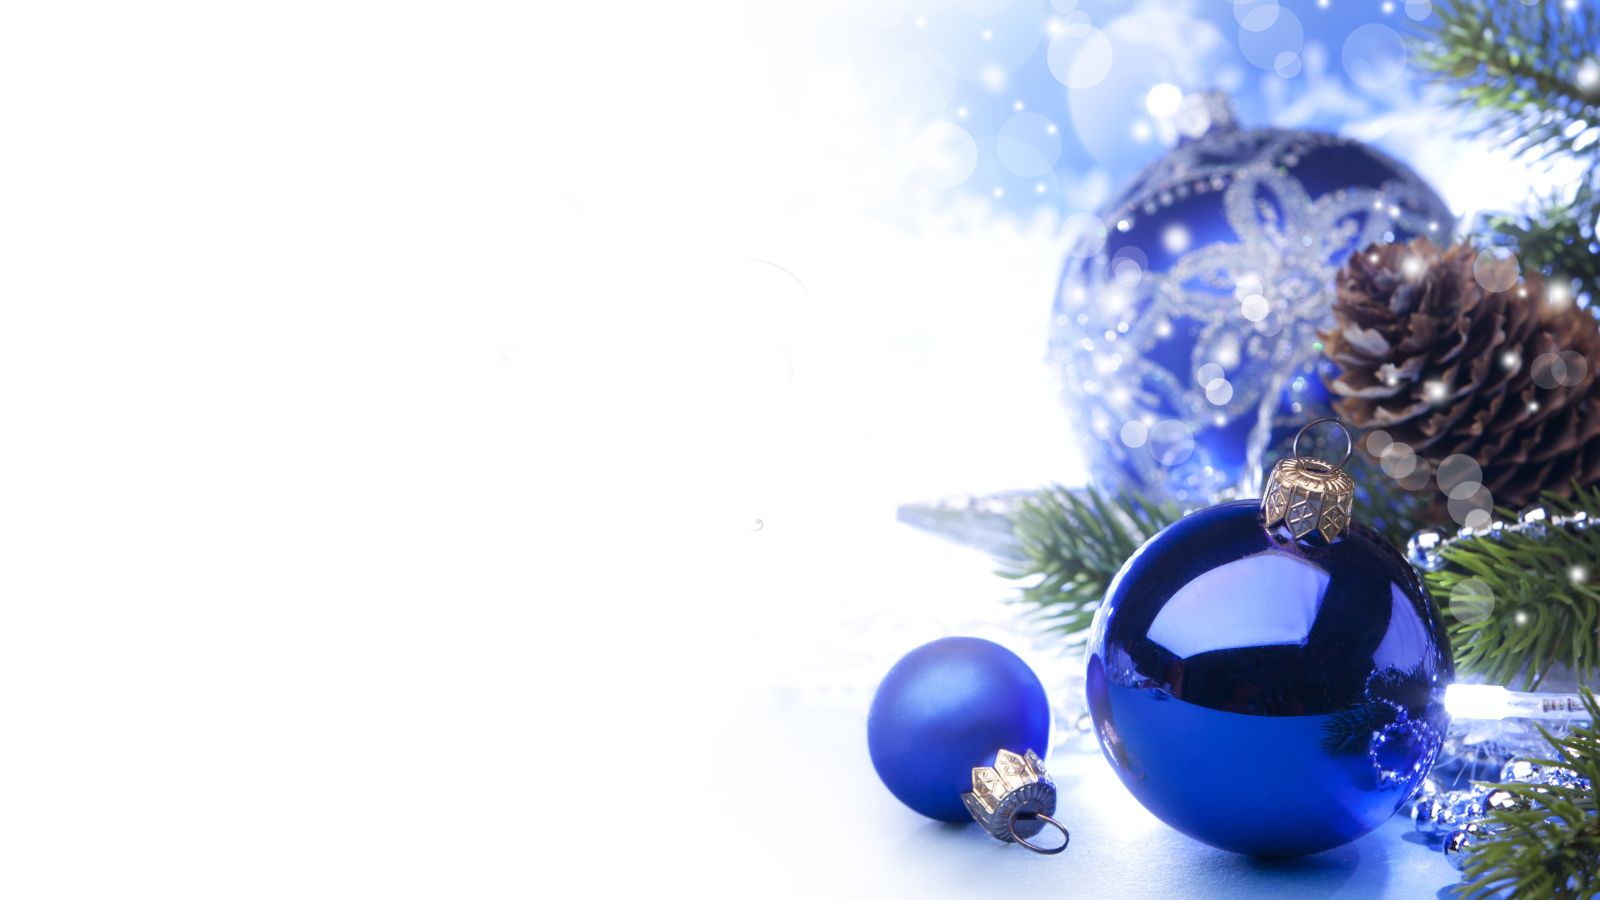 The blue balls on the Christmas tree Desktop wallpaper 1600x900